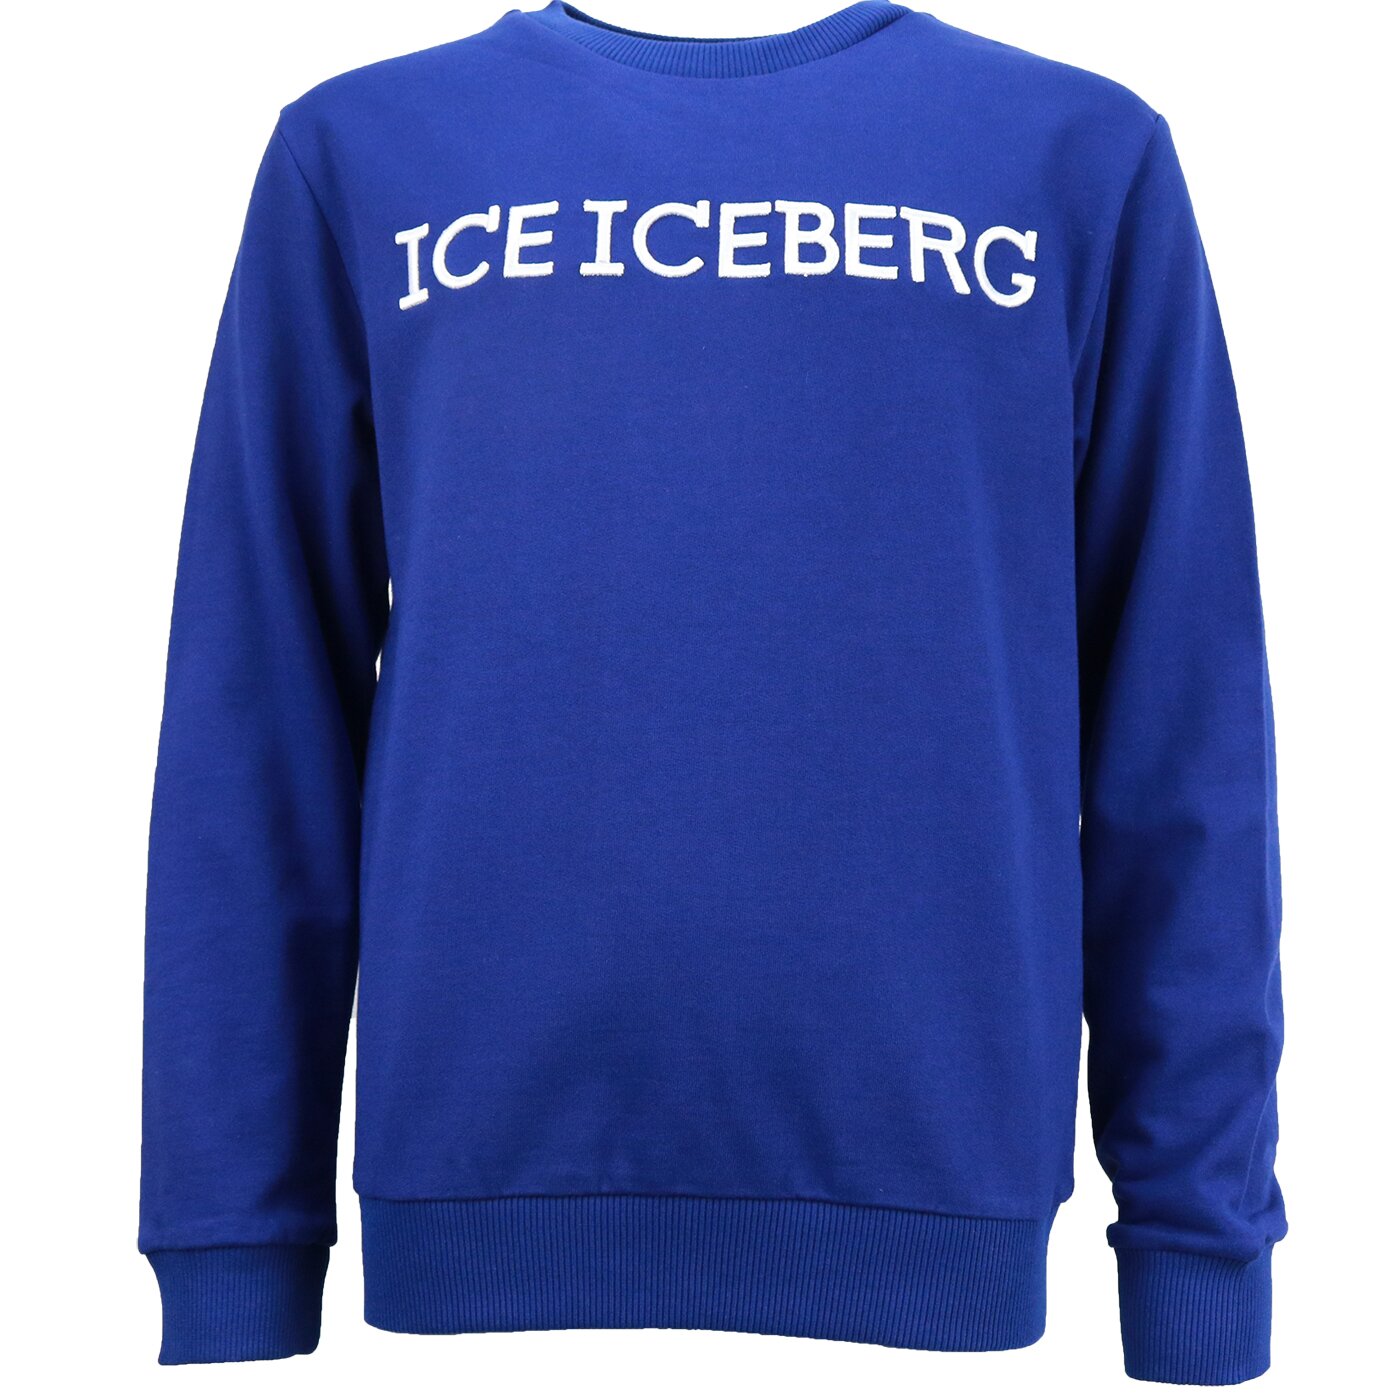 iceberg-sweater-cobalt-MFICE0318J - Fashion for Kids Teens